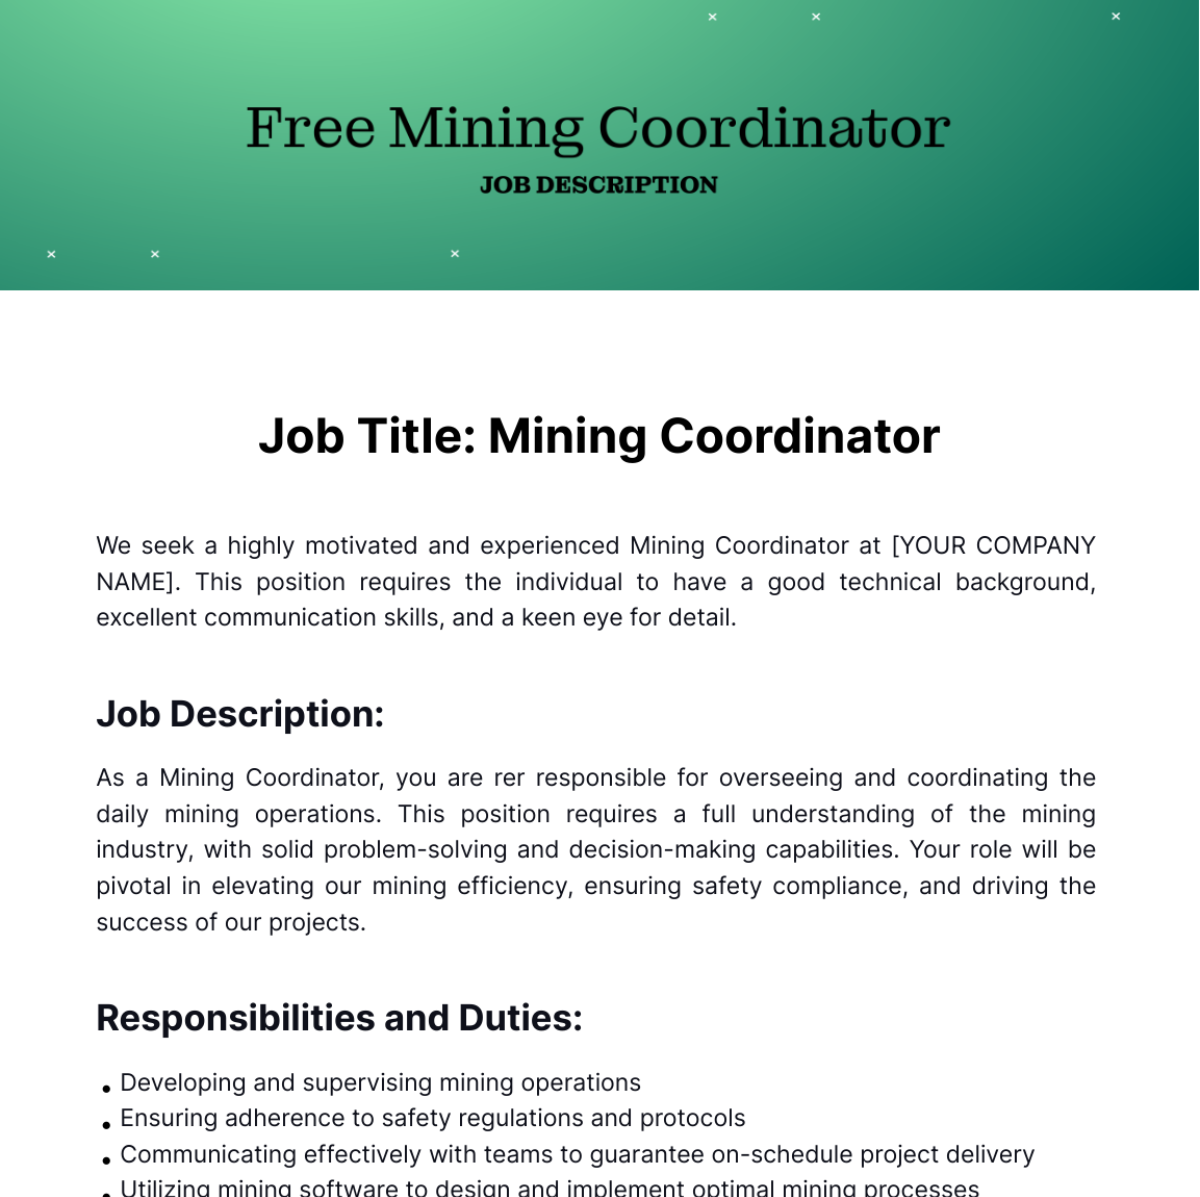 Free Mining Coordinator Job Description Template